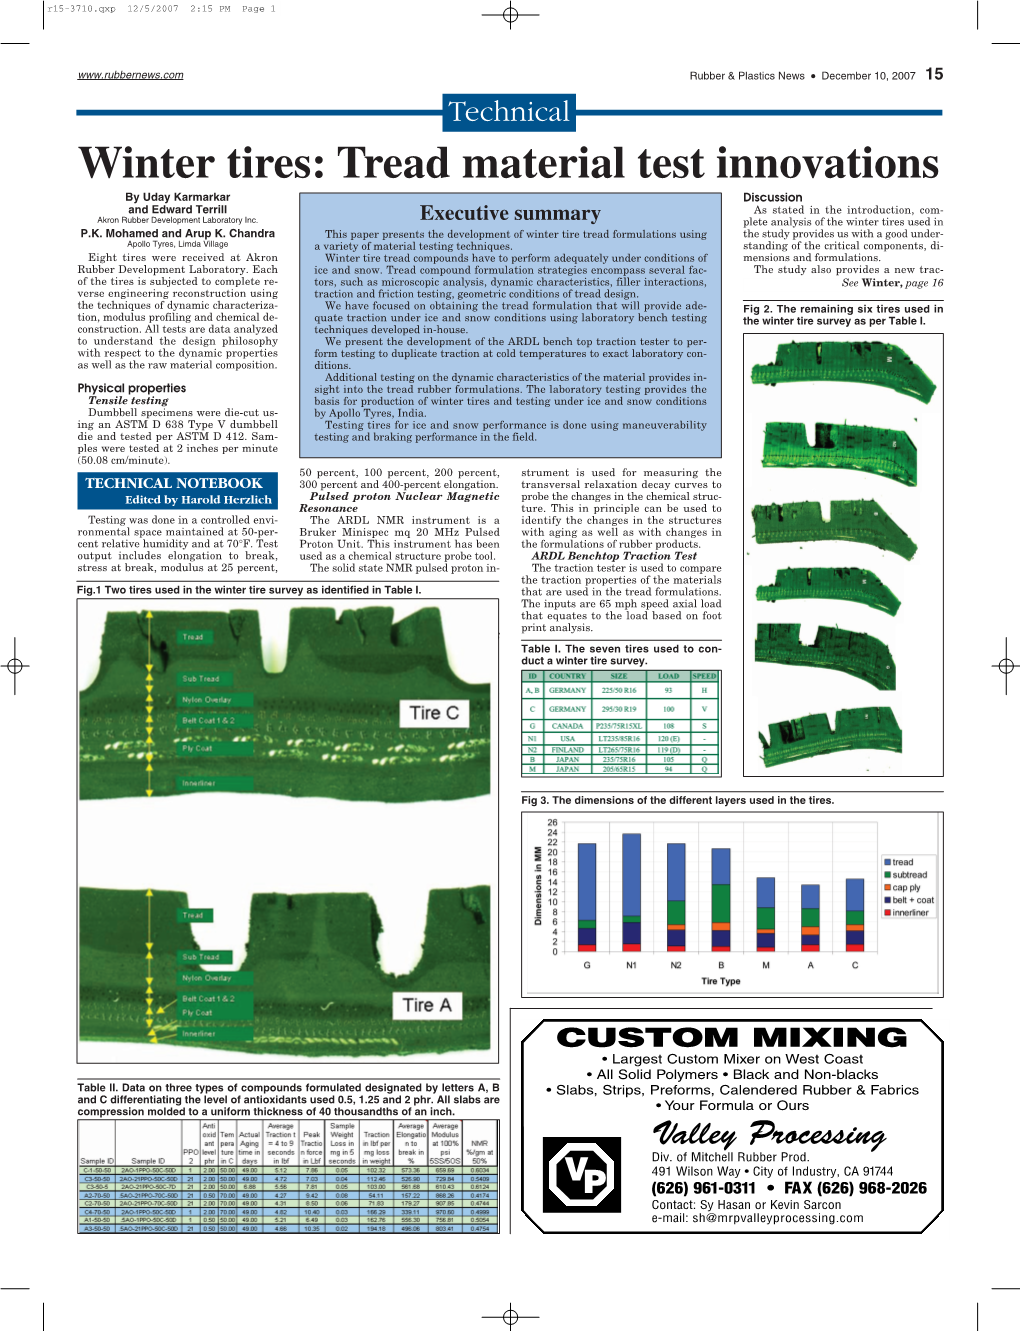 Winter Tires: Tread Material Test Innovations